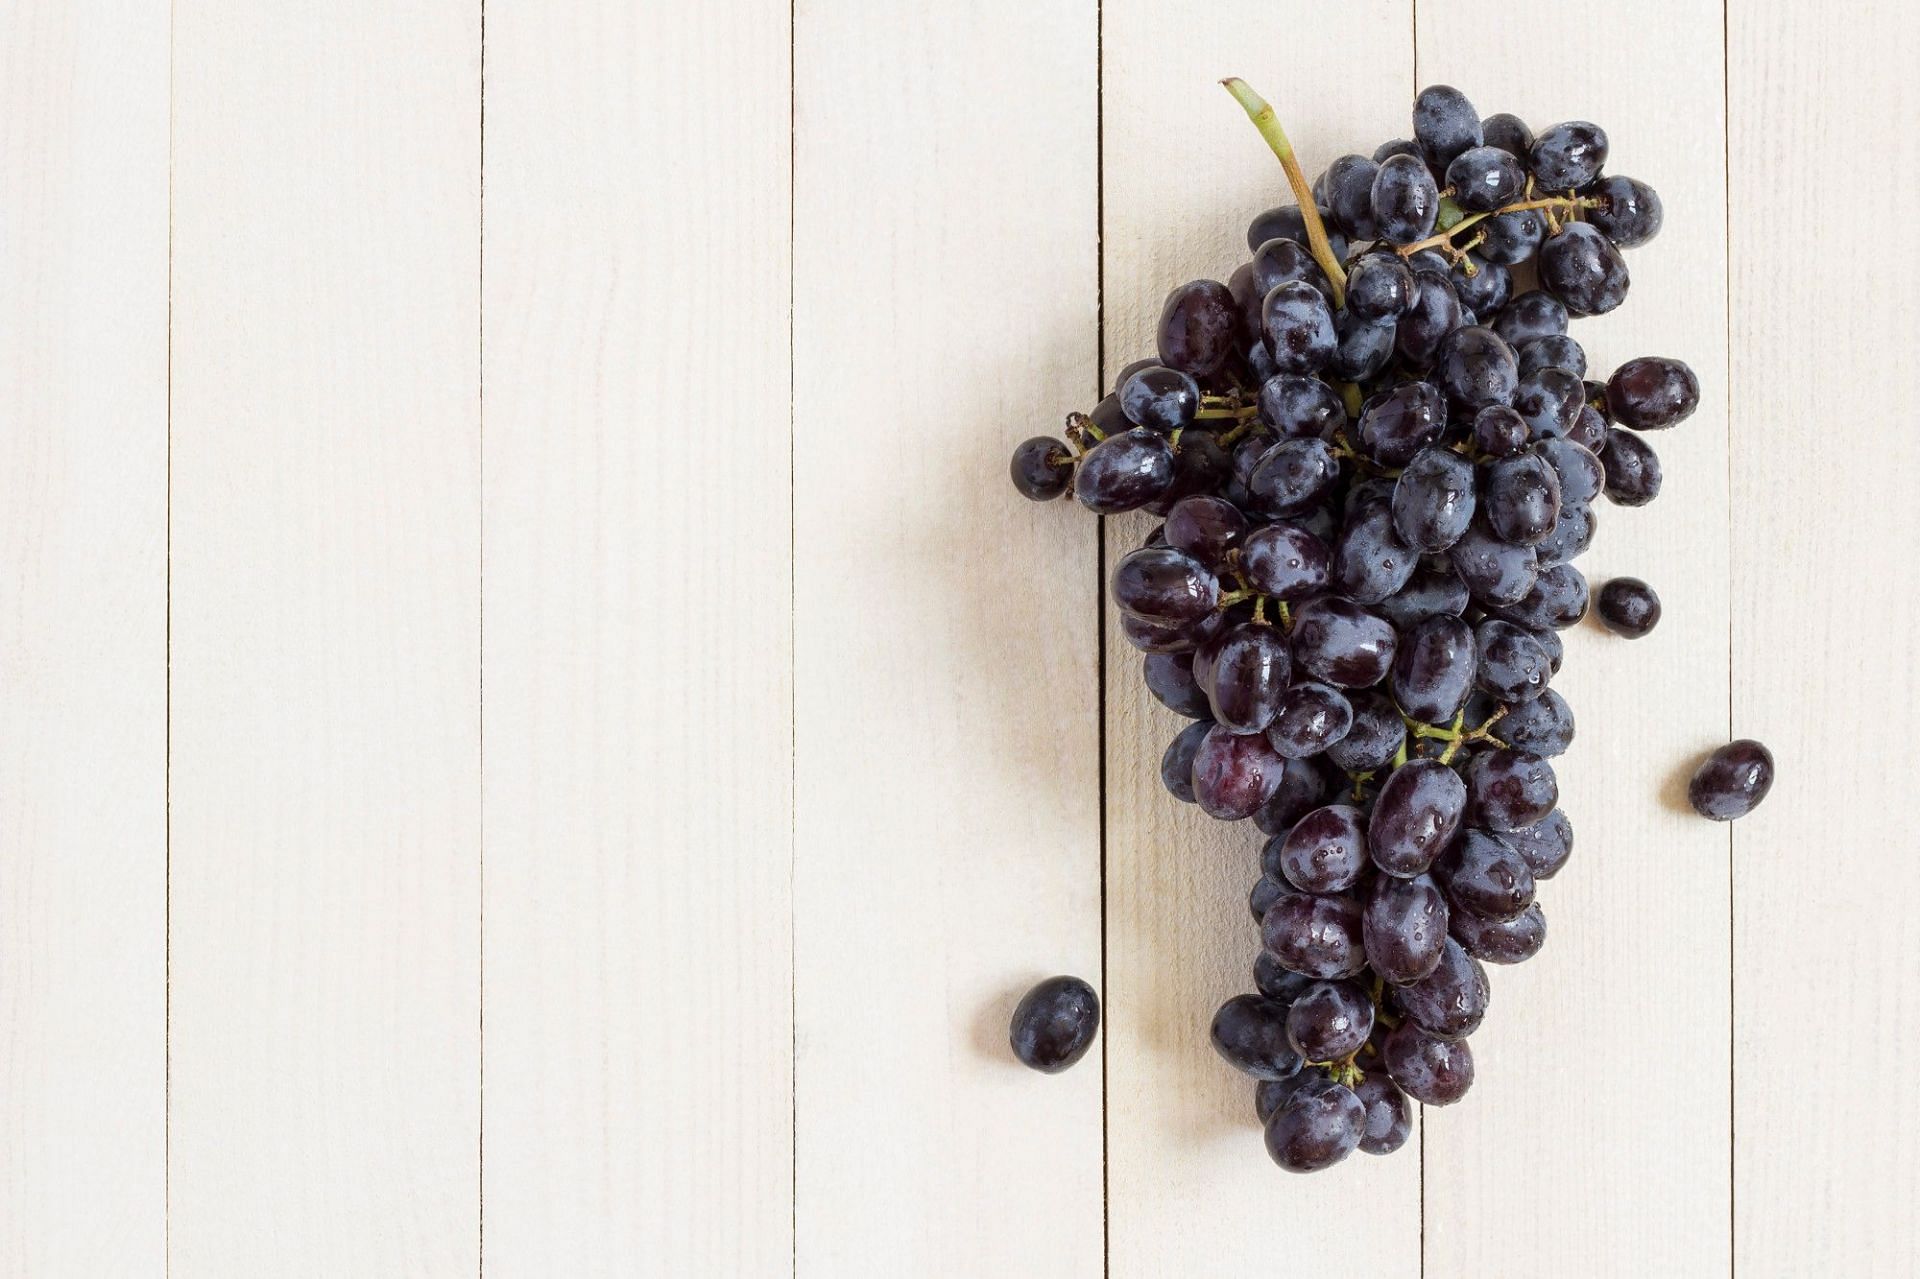 Black grapes improve insulin sensitivity. (Image via Freepik)